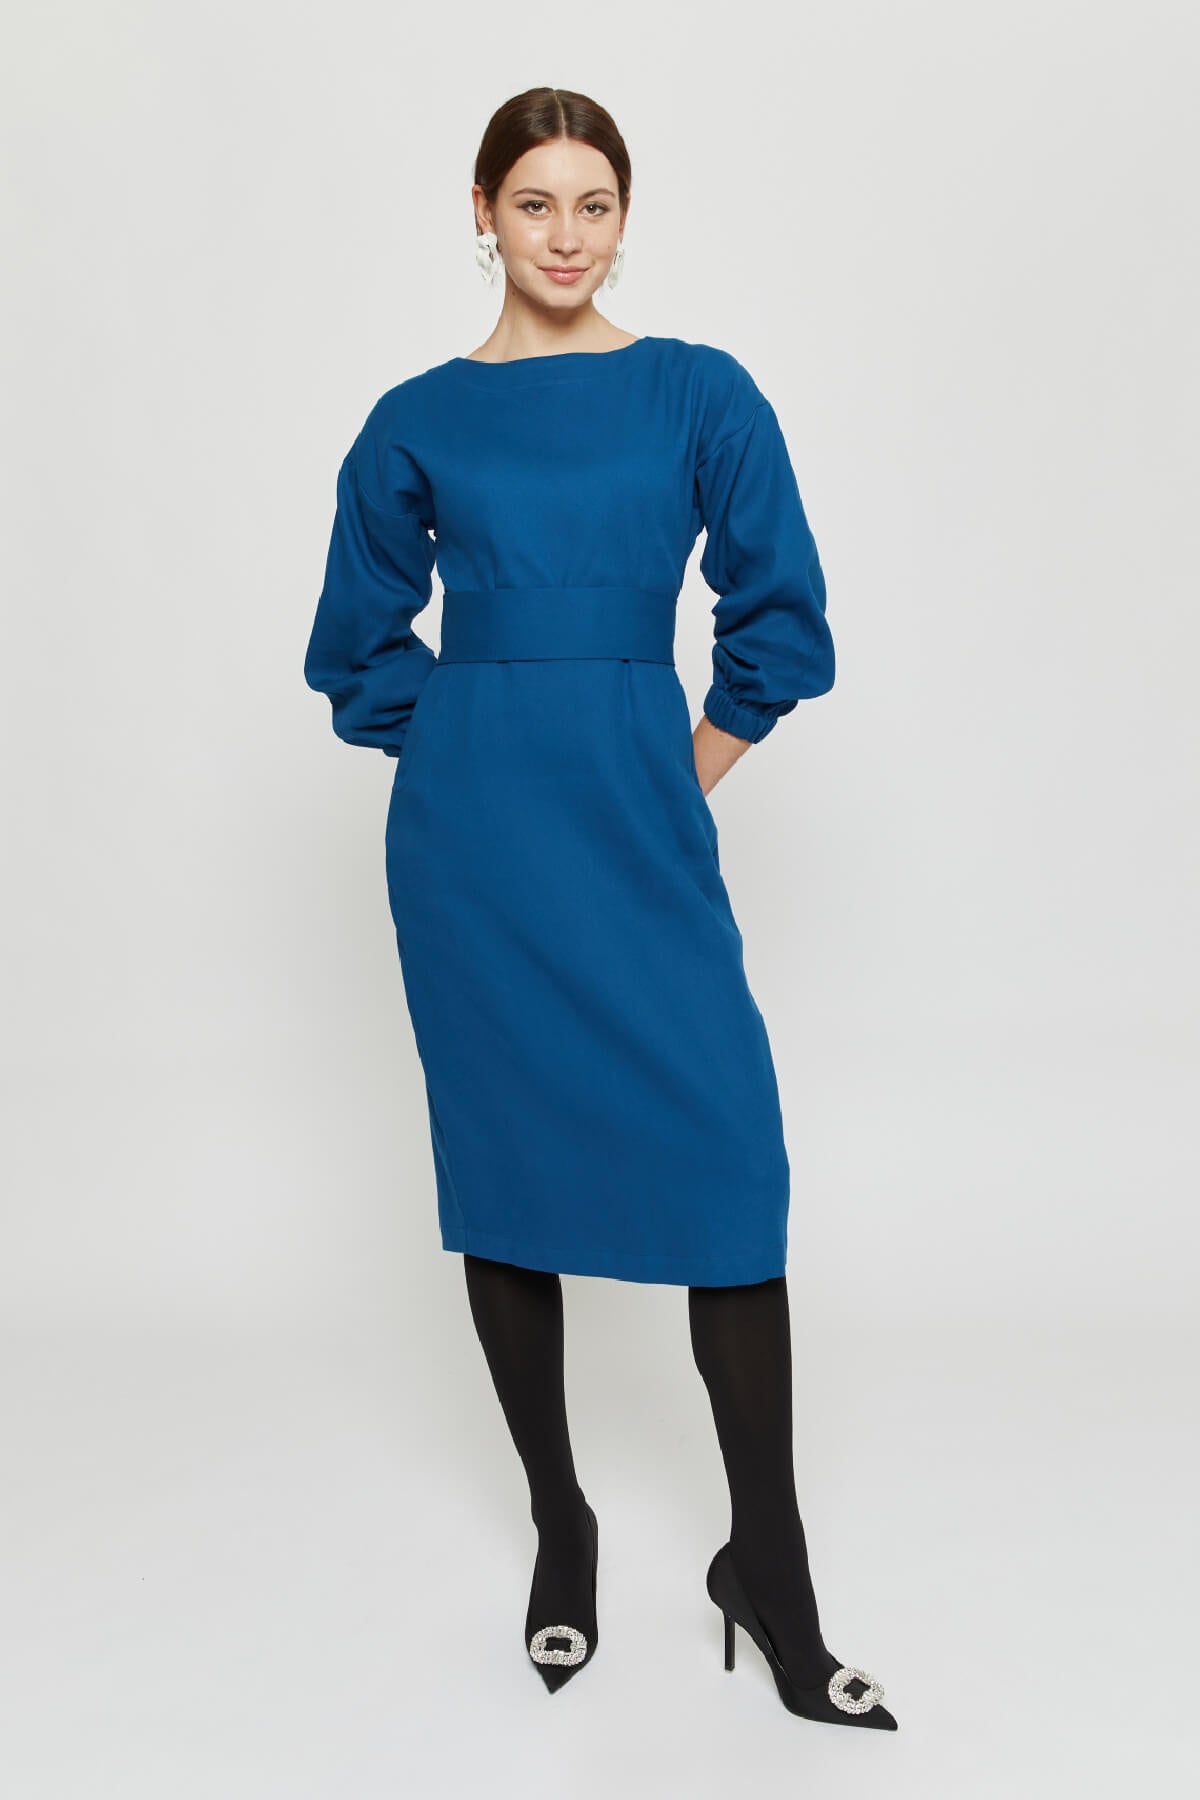 Stefanie | Winter Dress with Kimono Belt in Petrol-Blue